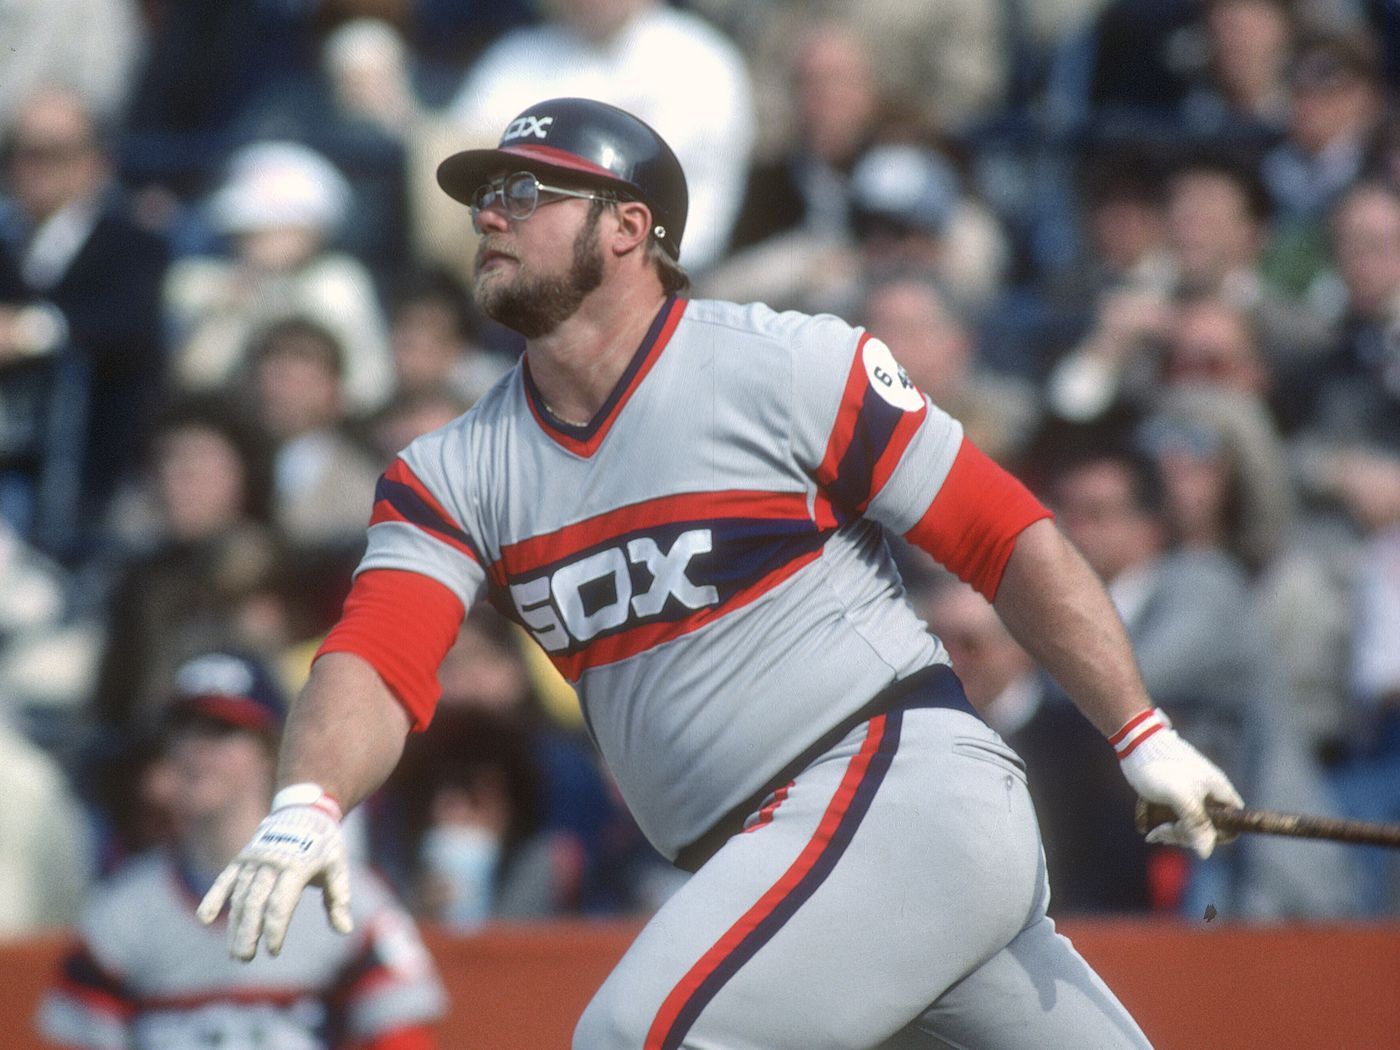 1983 chicago white sox shorts uniforms